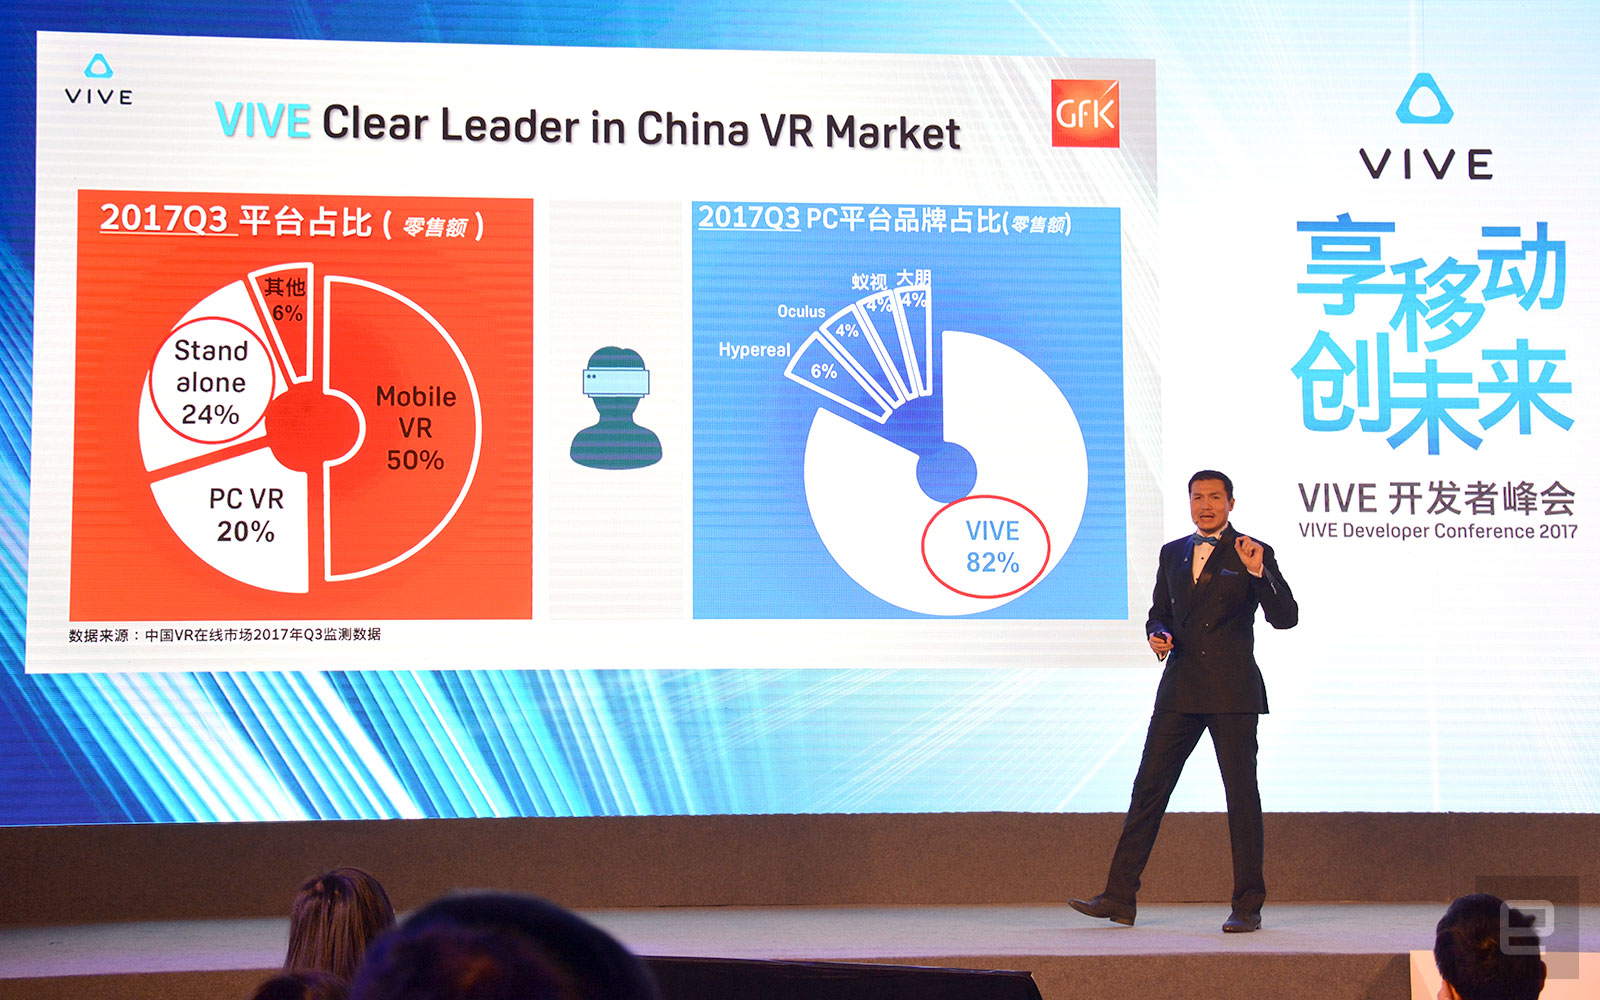 htc vive mobile standalone market share q3 china